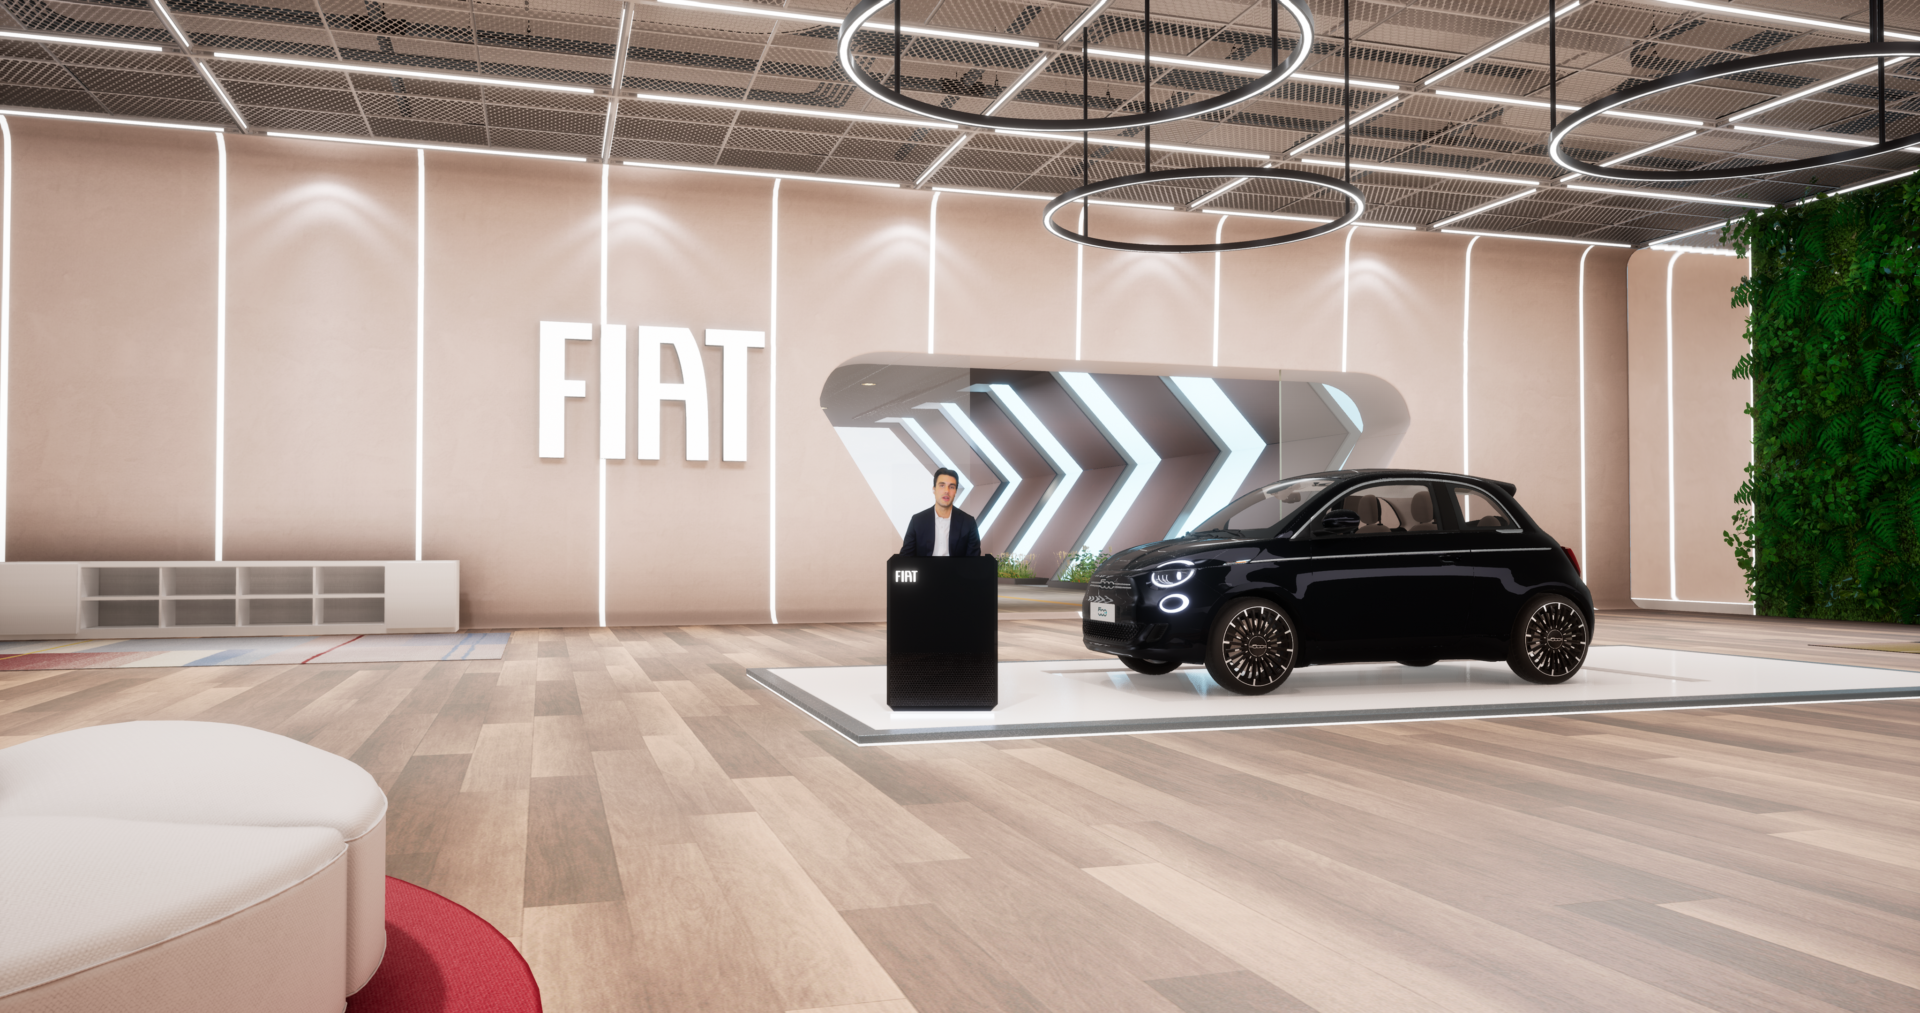 Primul showroom auto din Metavers - Fiat Metaverse Store